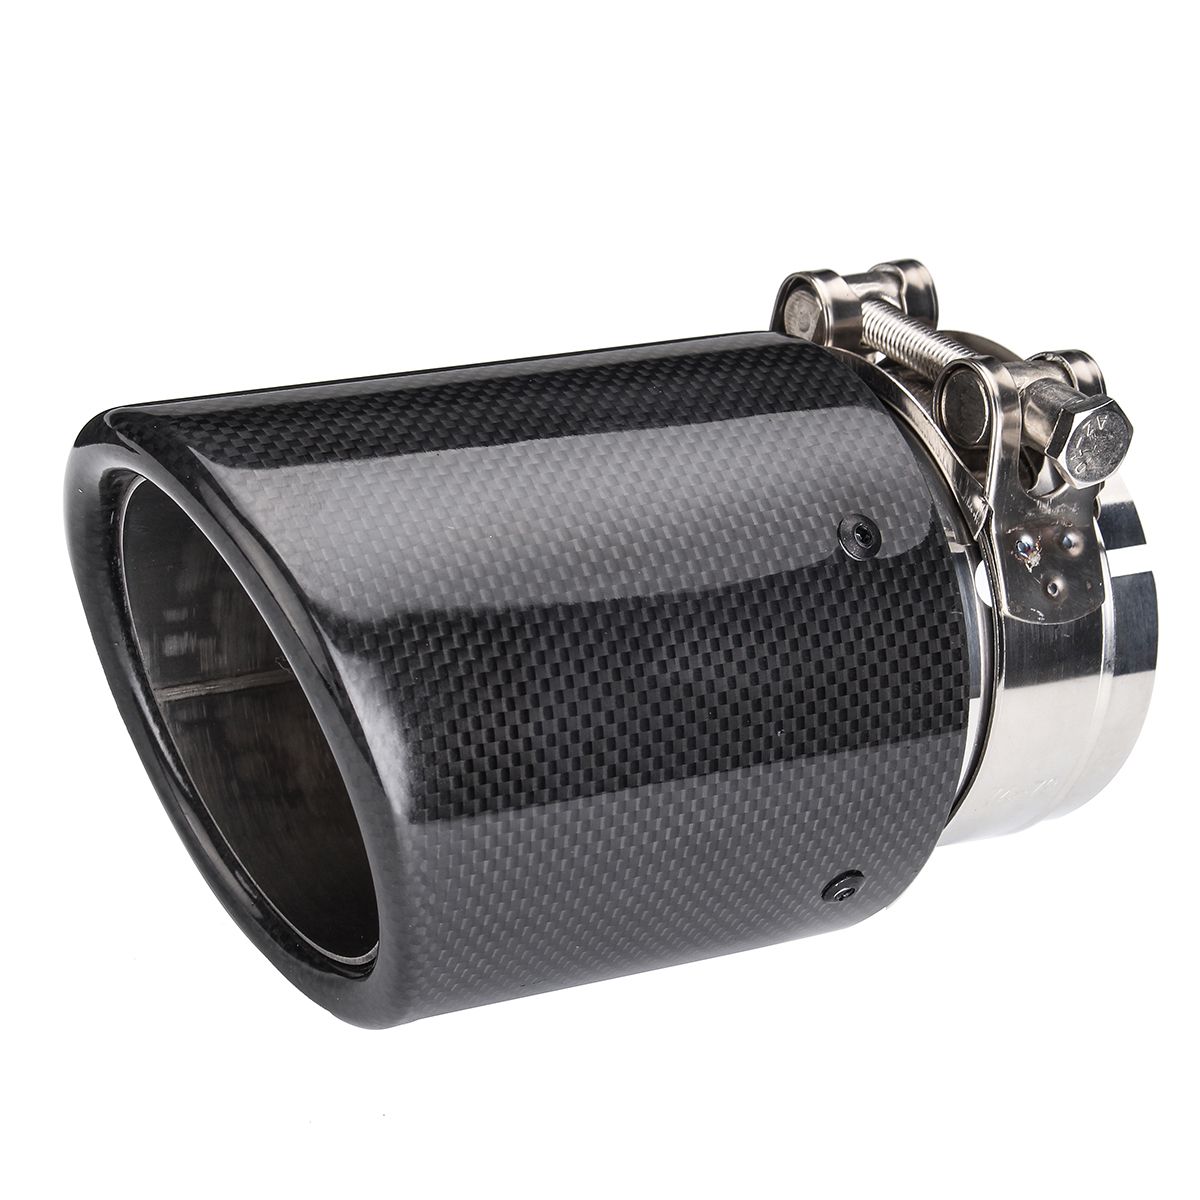 Car-Exhaust-Tip-Glossy-Black-Carbon-Fiber-End-Pipe-Muffler-Universal-80mm-101mm-1700165